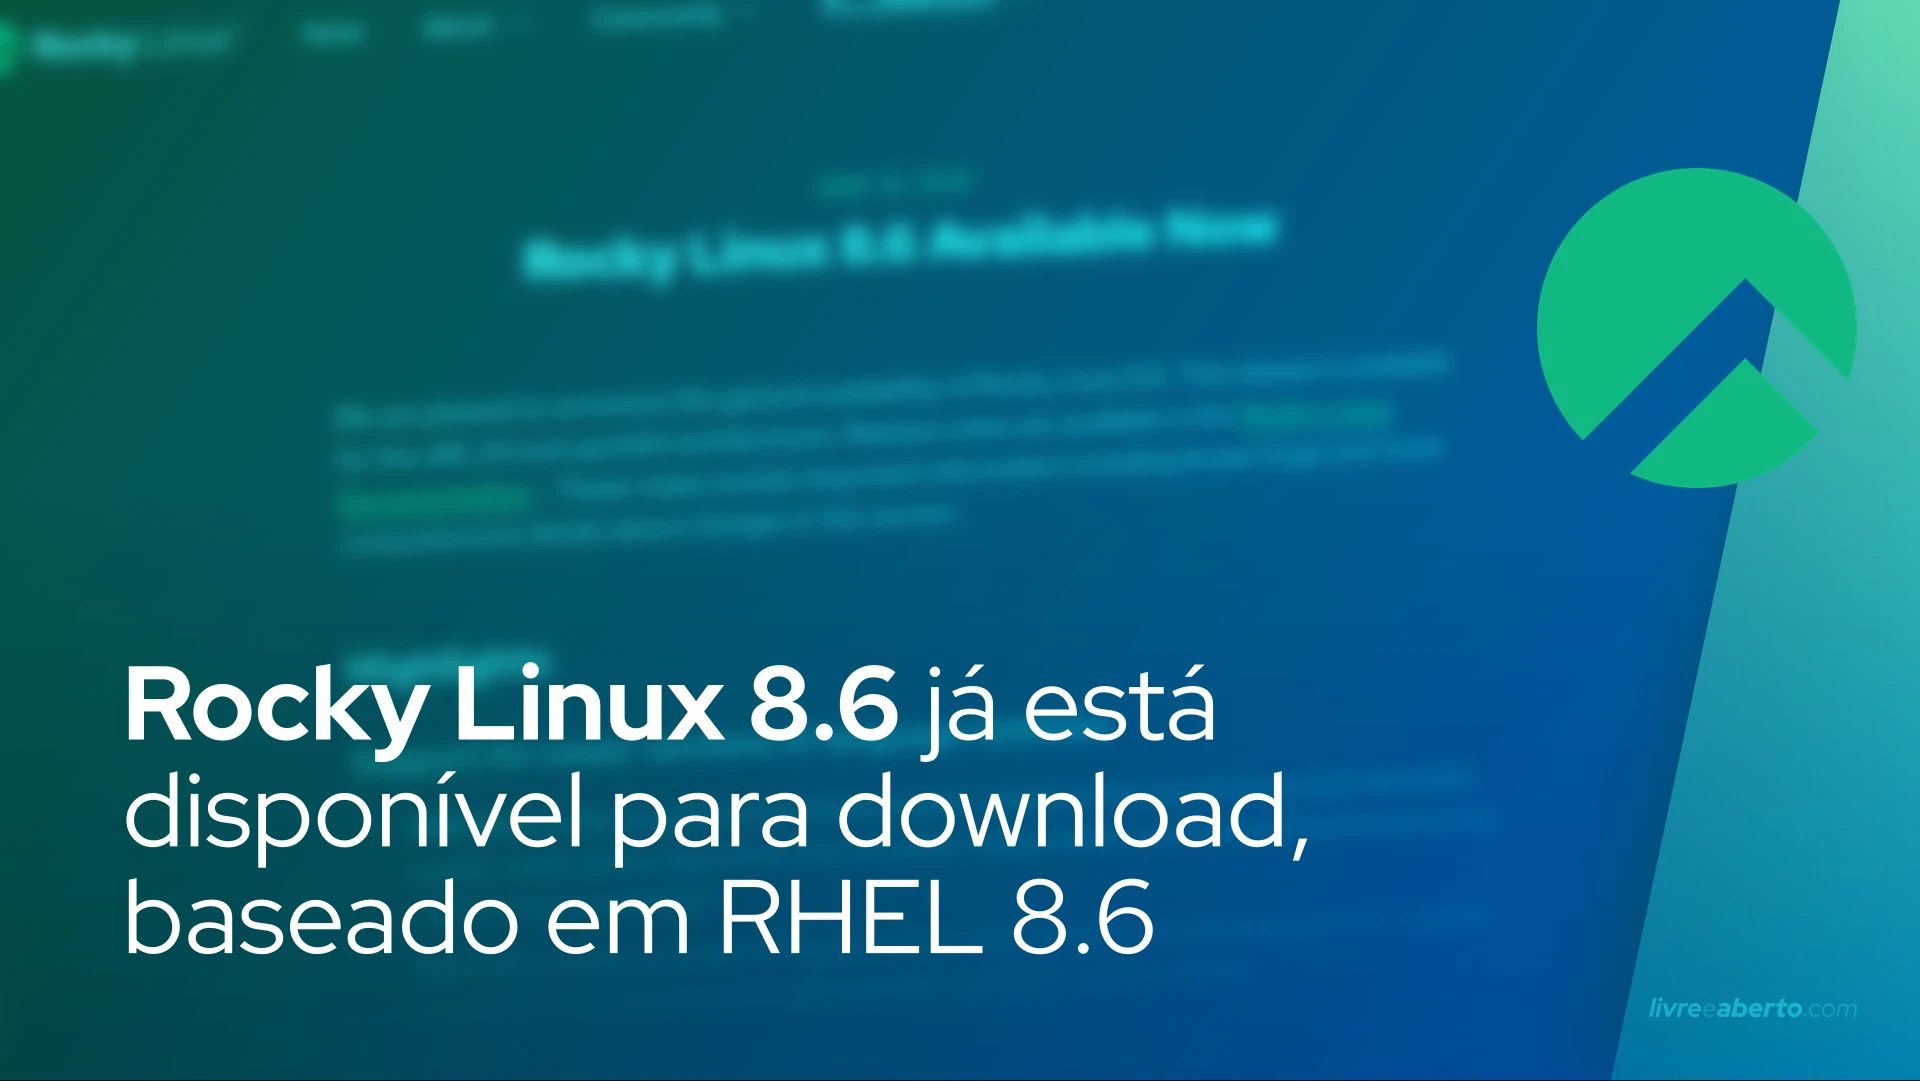 Rocky Linux 8.6 já está disponível para download, baseado em RHEL 8.6